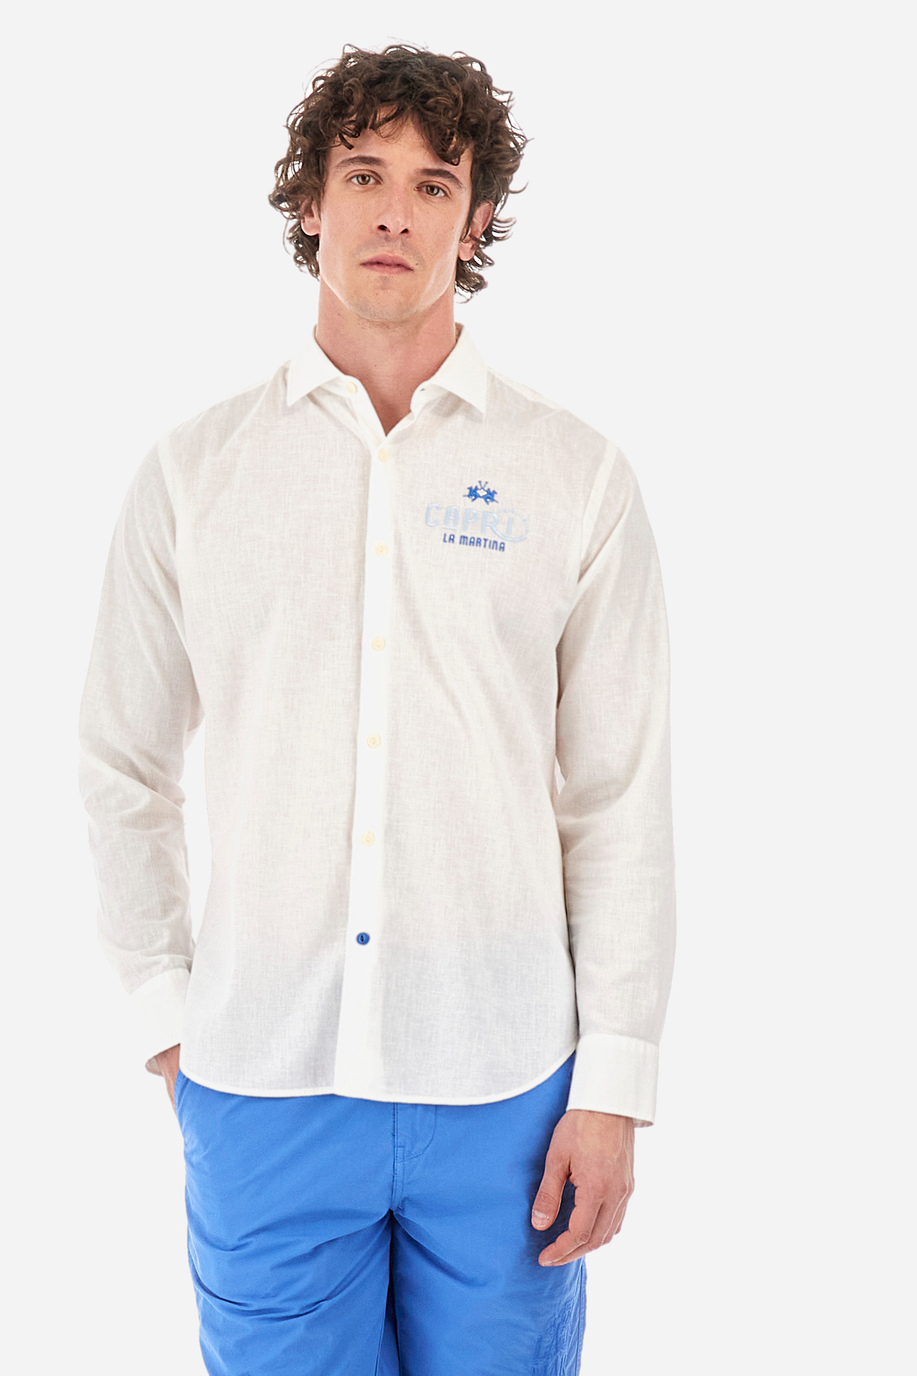 Cotton and linen shirt - Innocent - Shirts | La Martina - Official Online Shop